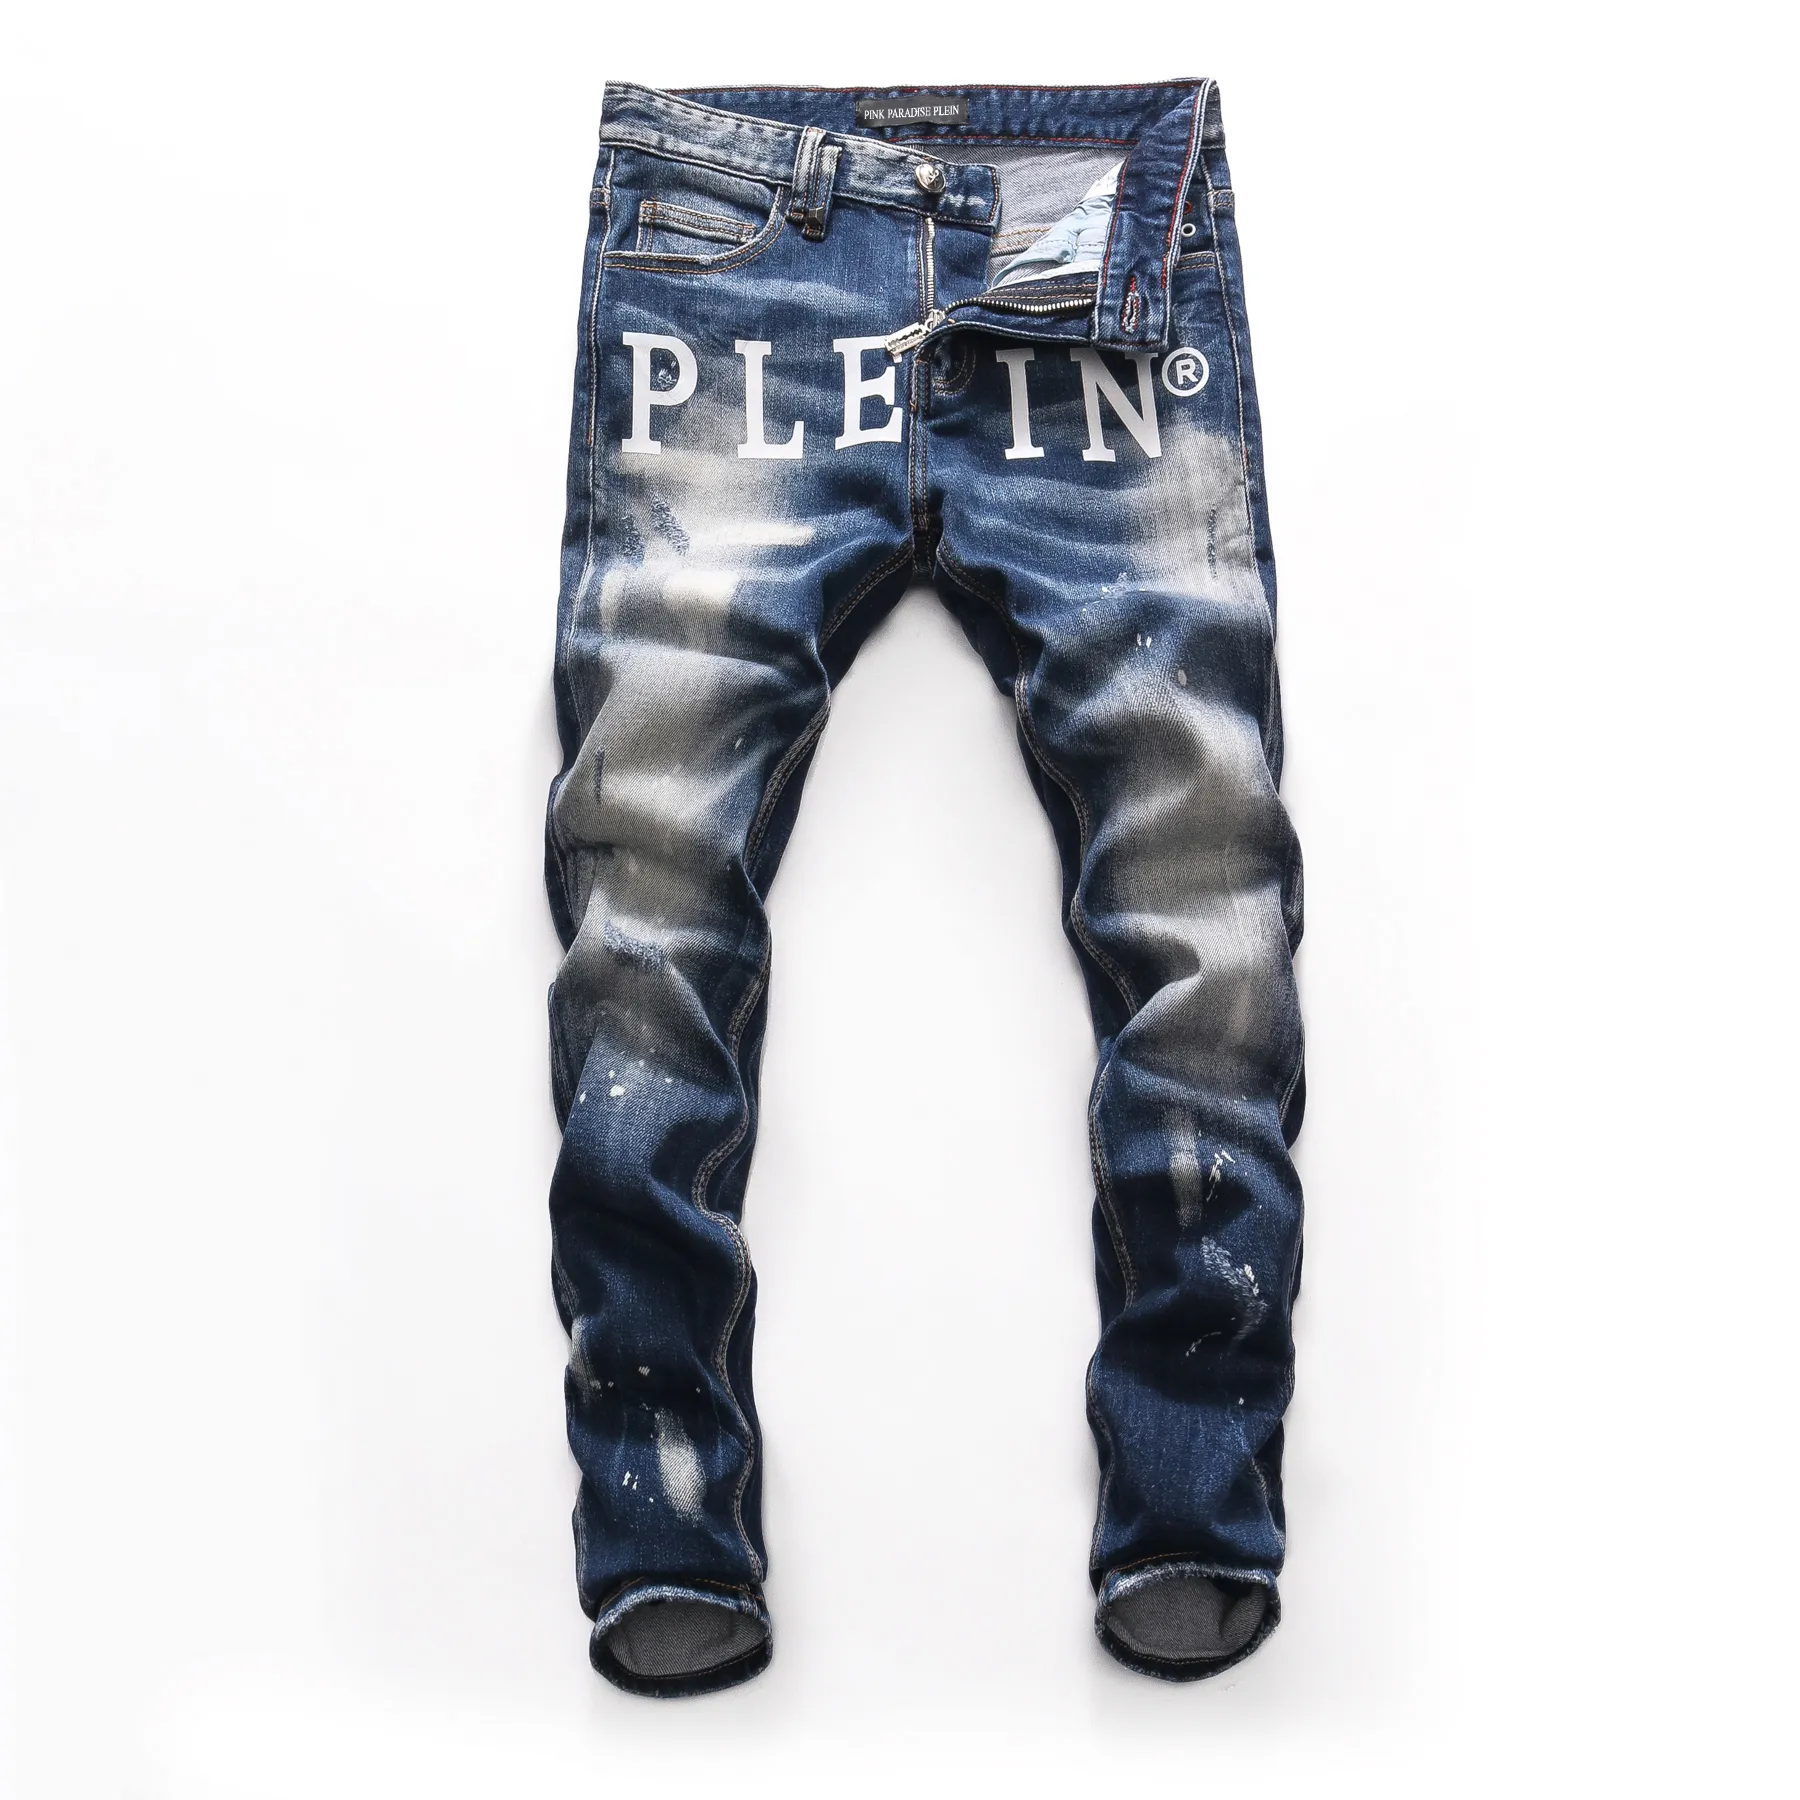 PINK PARADISE PLEIN Clássico Moda Masculina Jeans Rock Moto Masculino Design Casual Jeans Rasgados Jeans Skinny Envelhecido Biker eans 157489